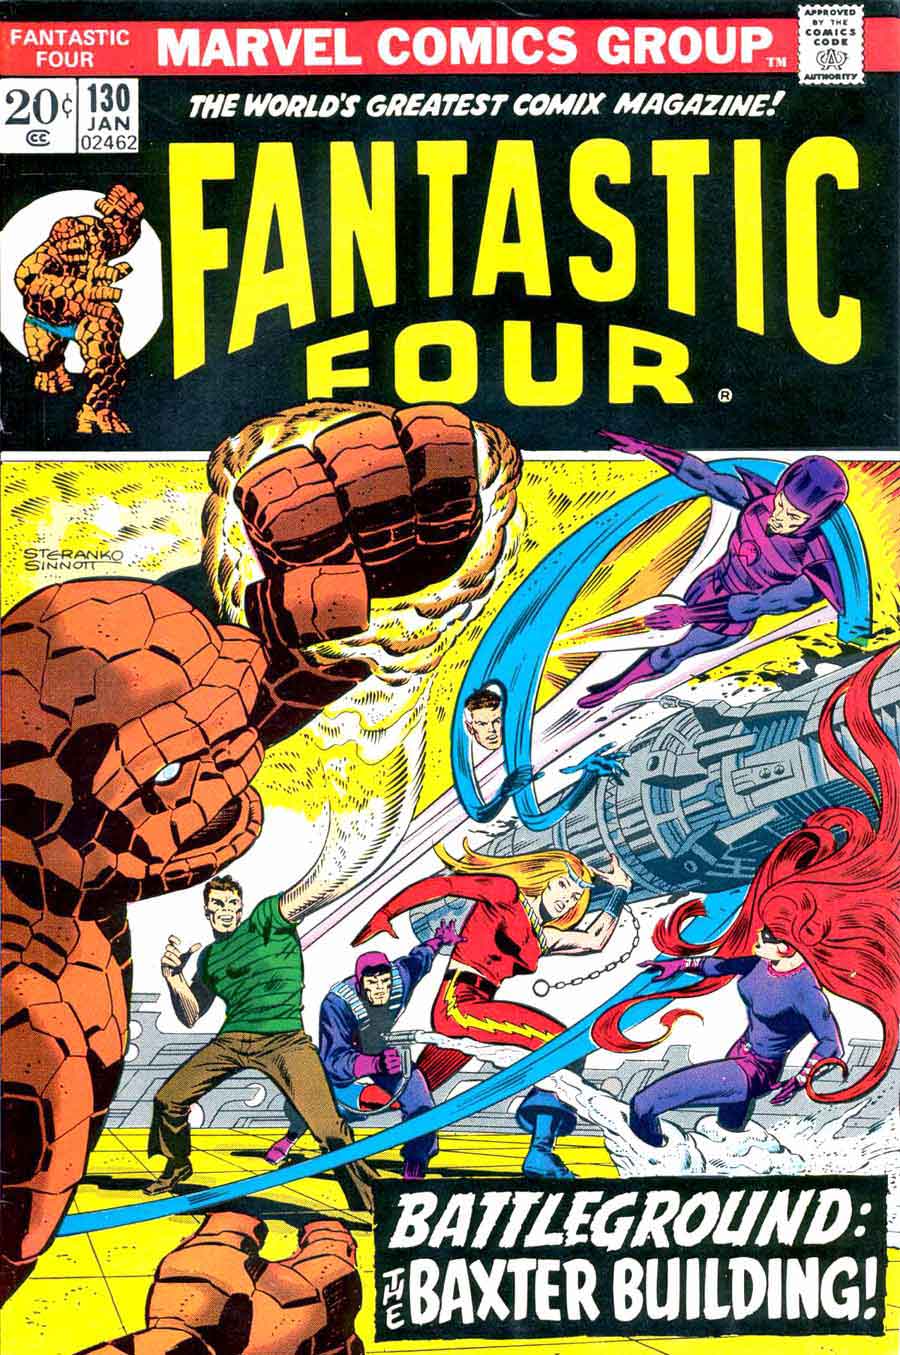 Fantastc Four v1 #130 marvel comic book cover art by Jim Steranko